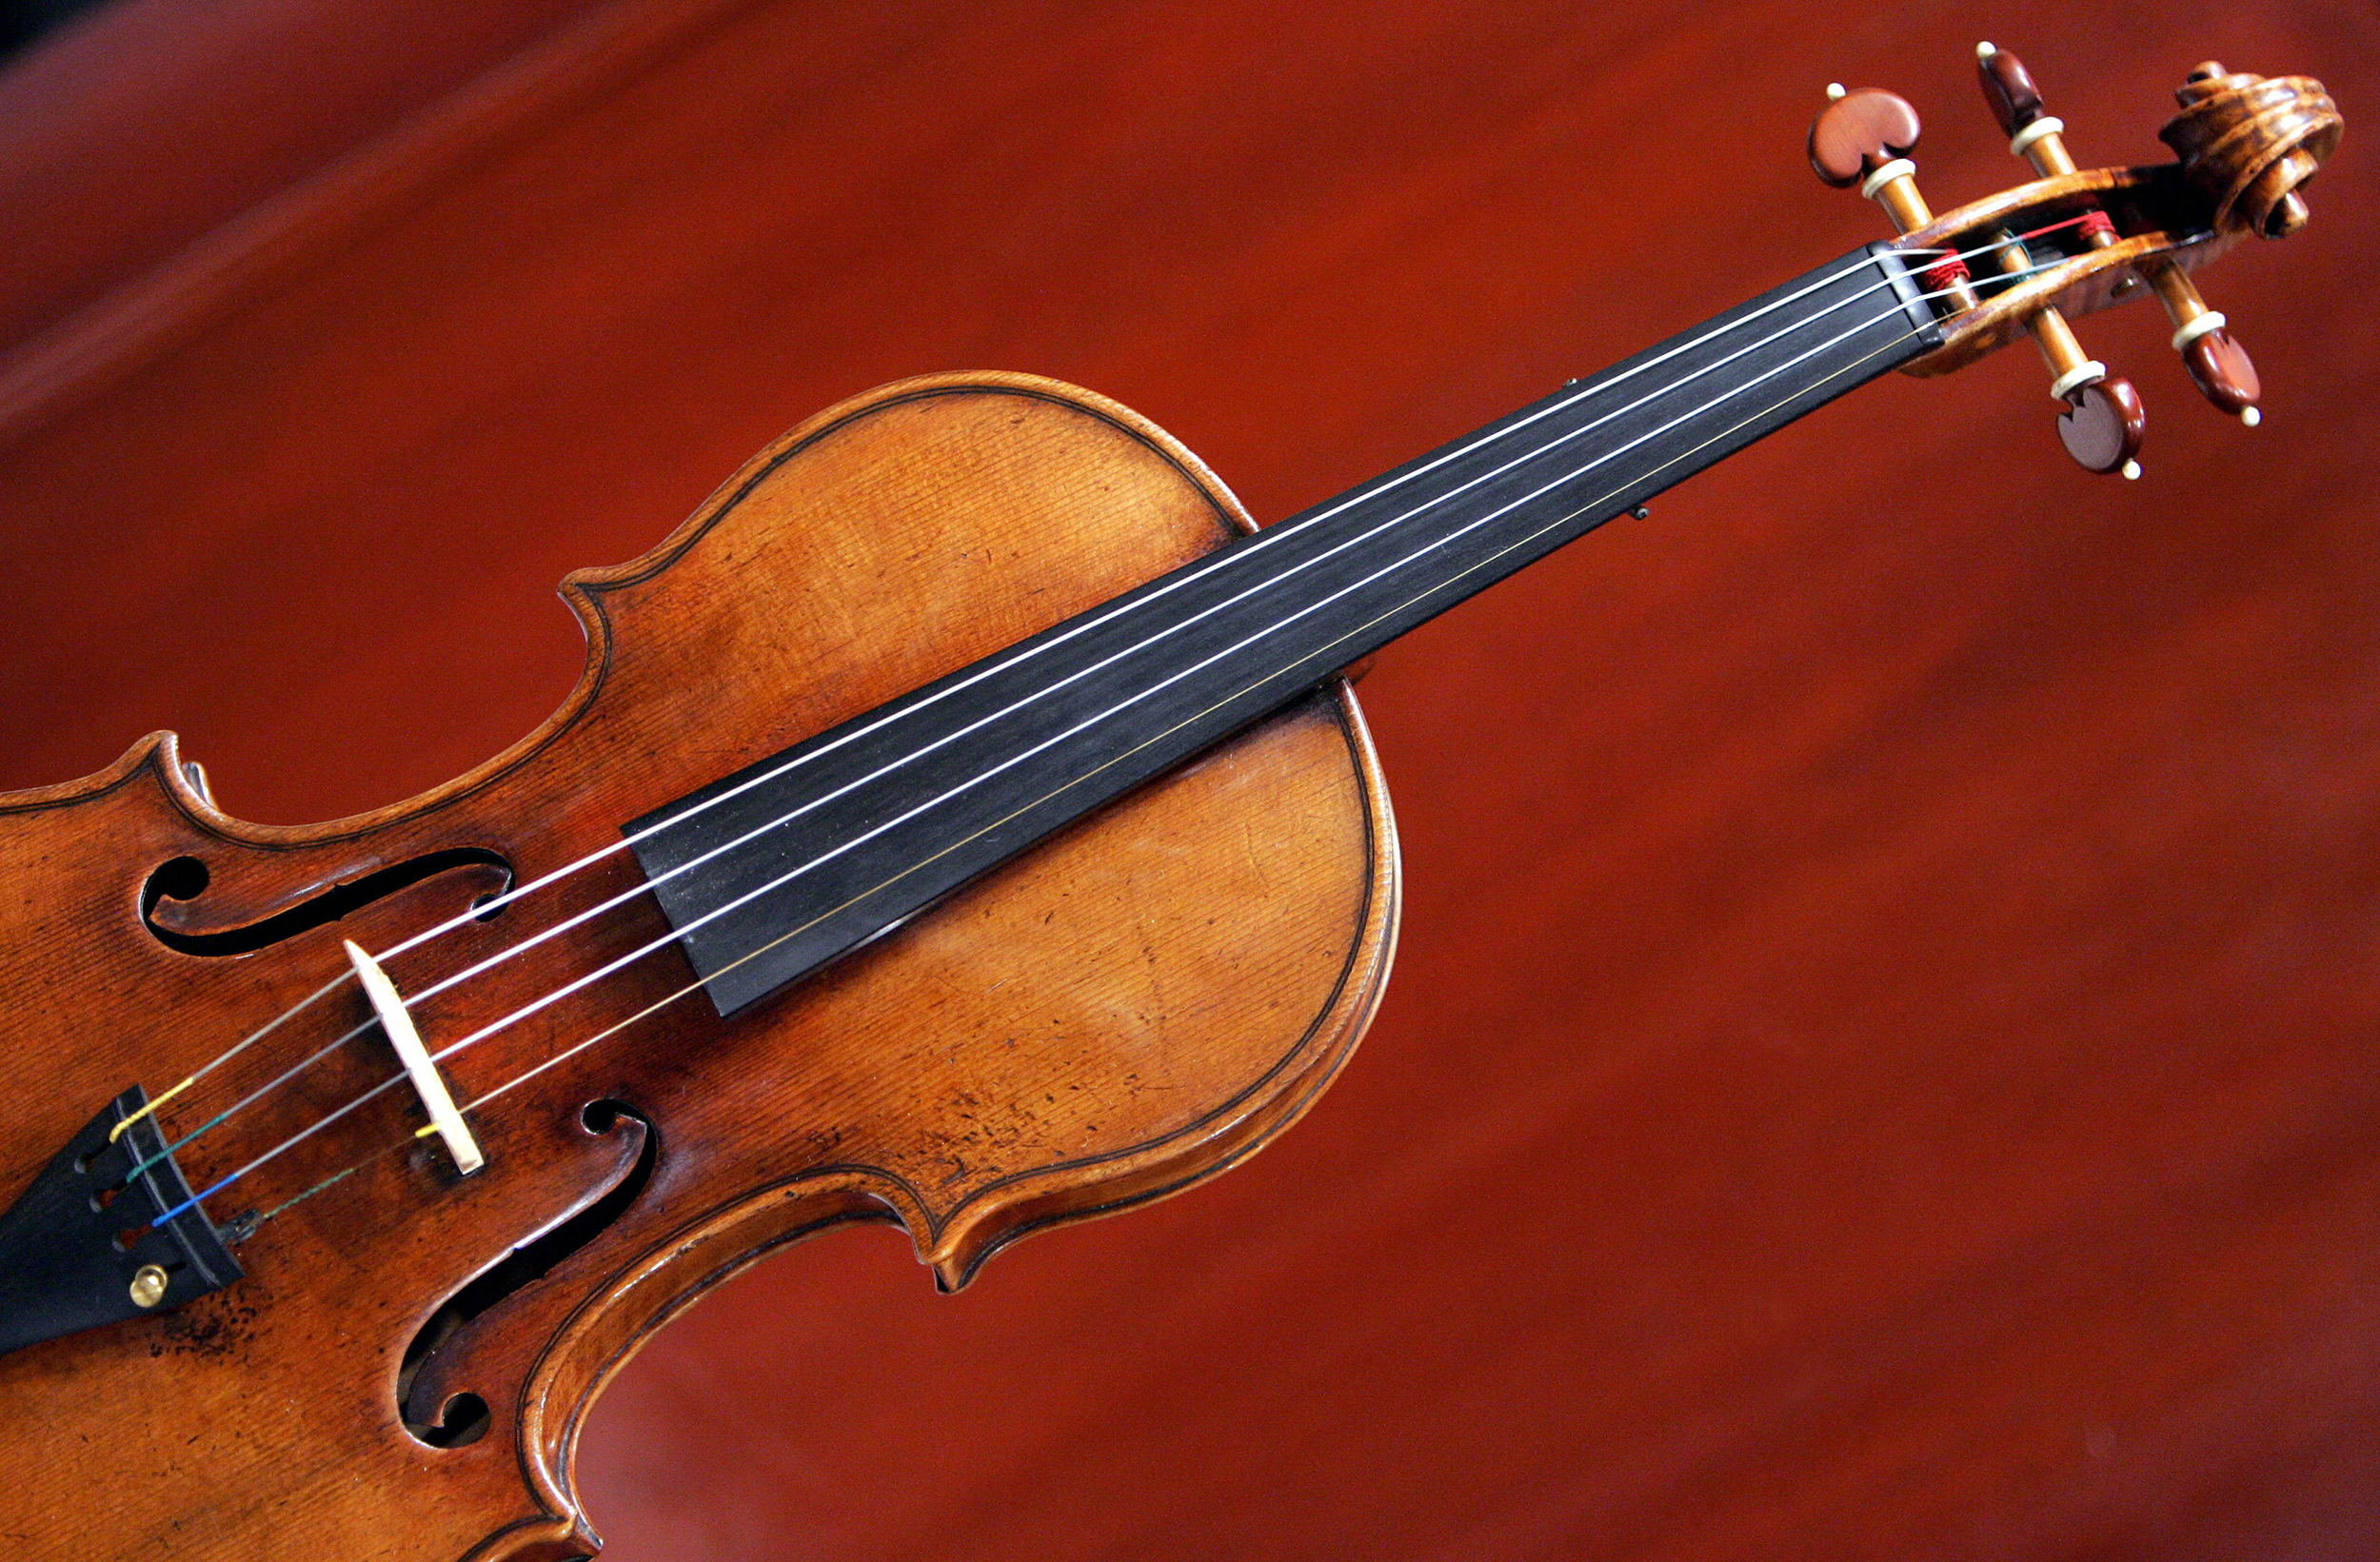 300-year-old Stradivarius violin from musician